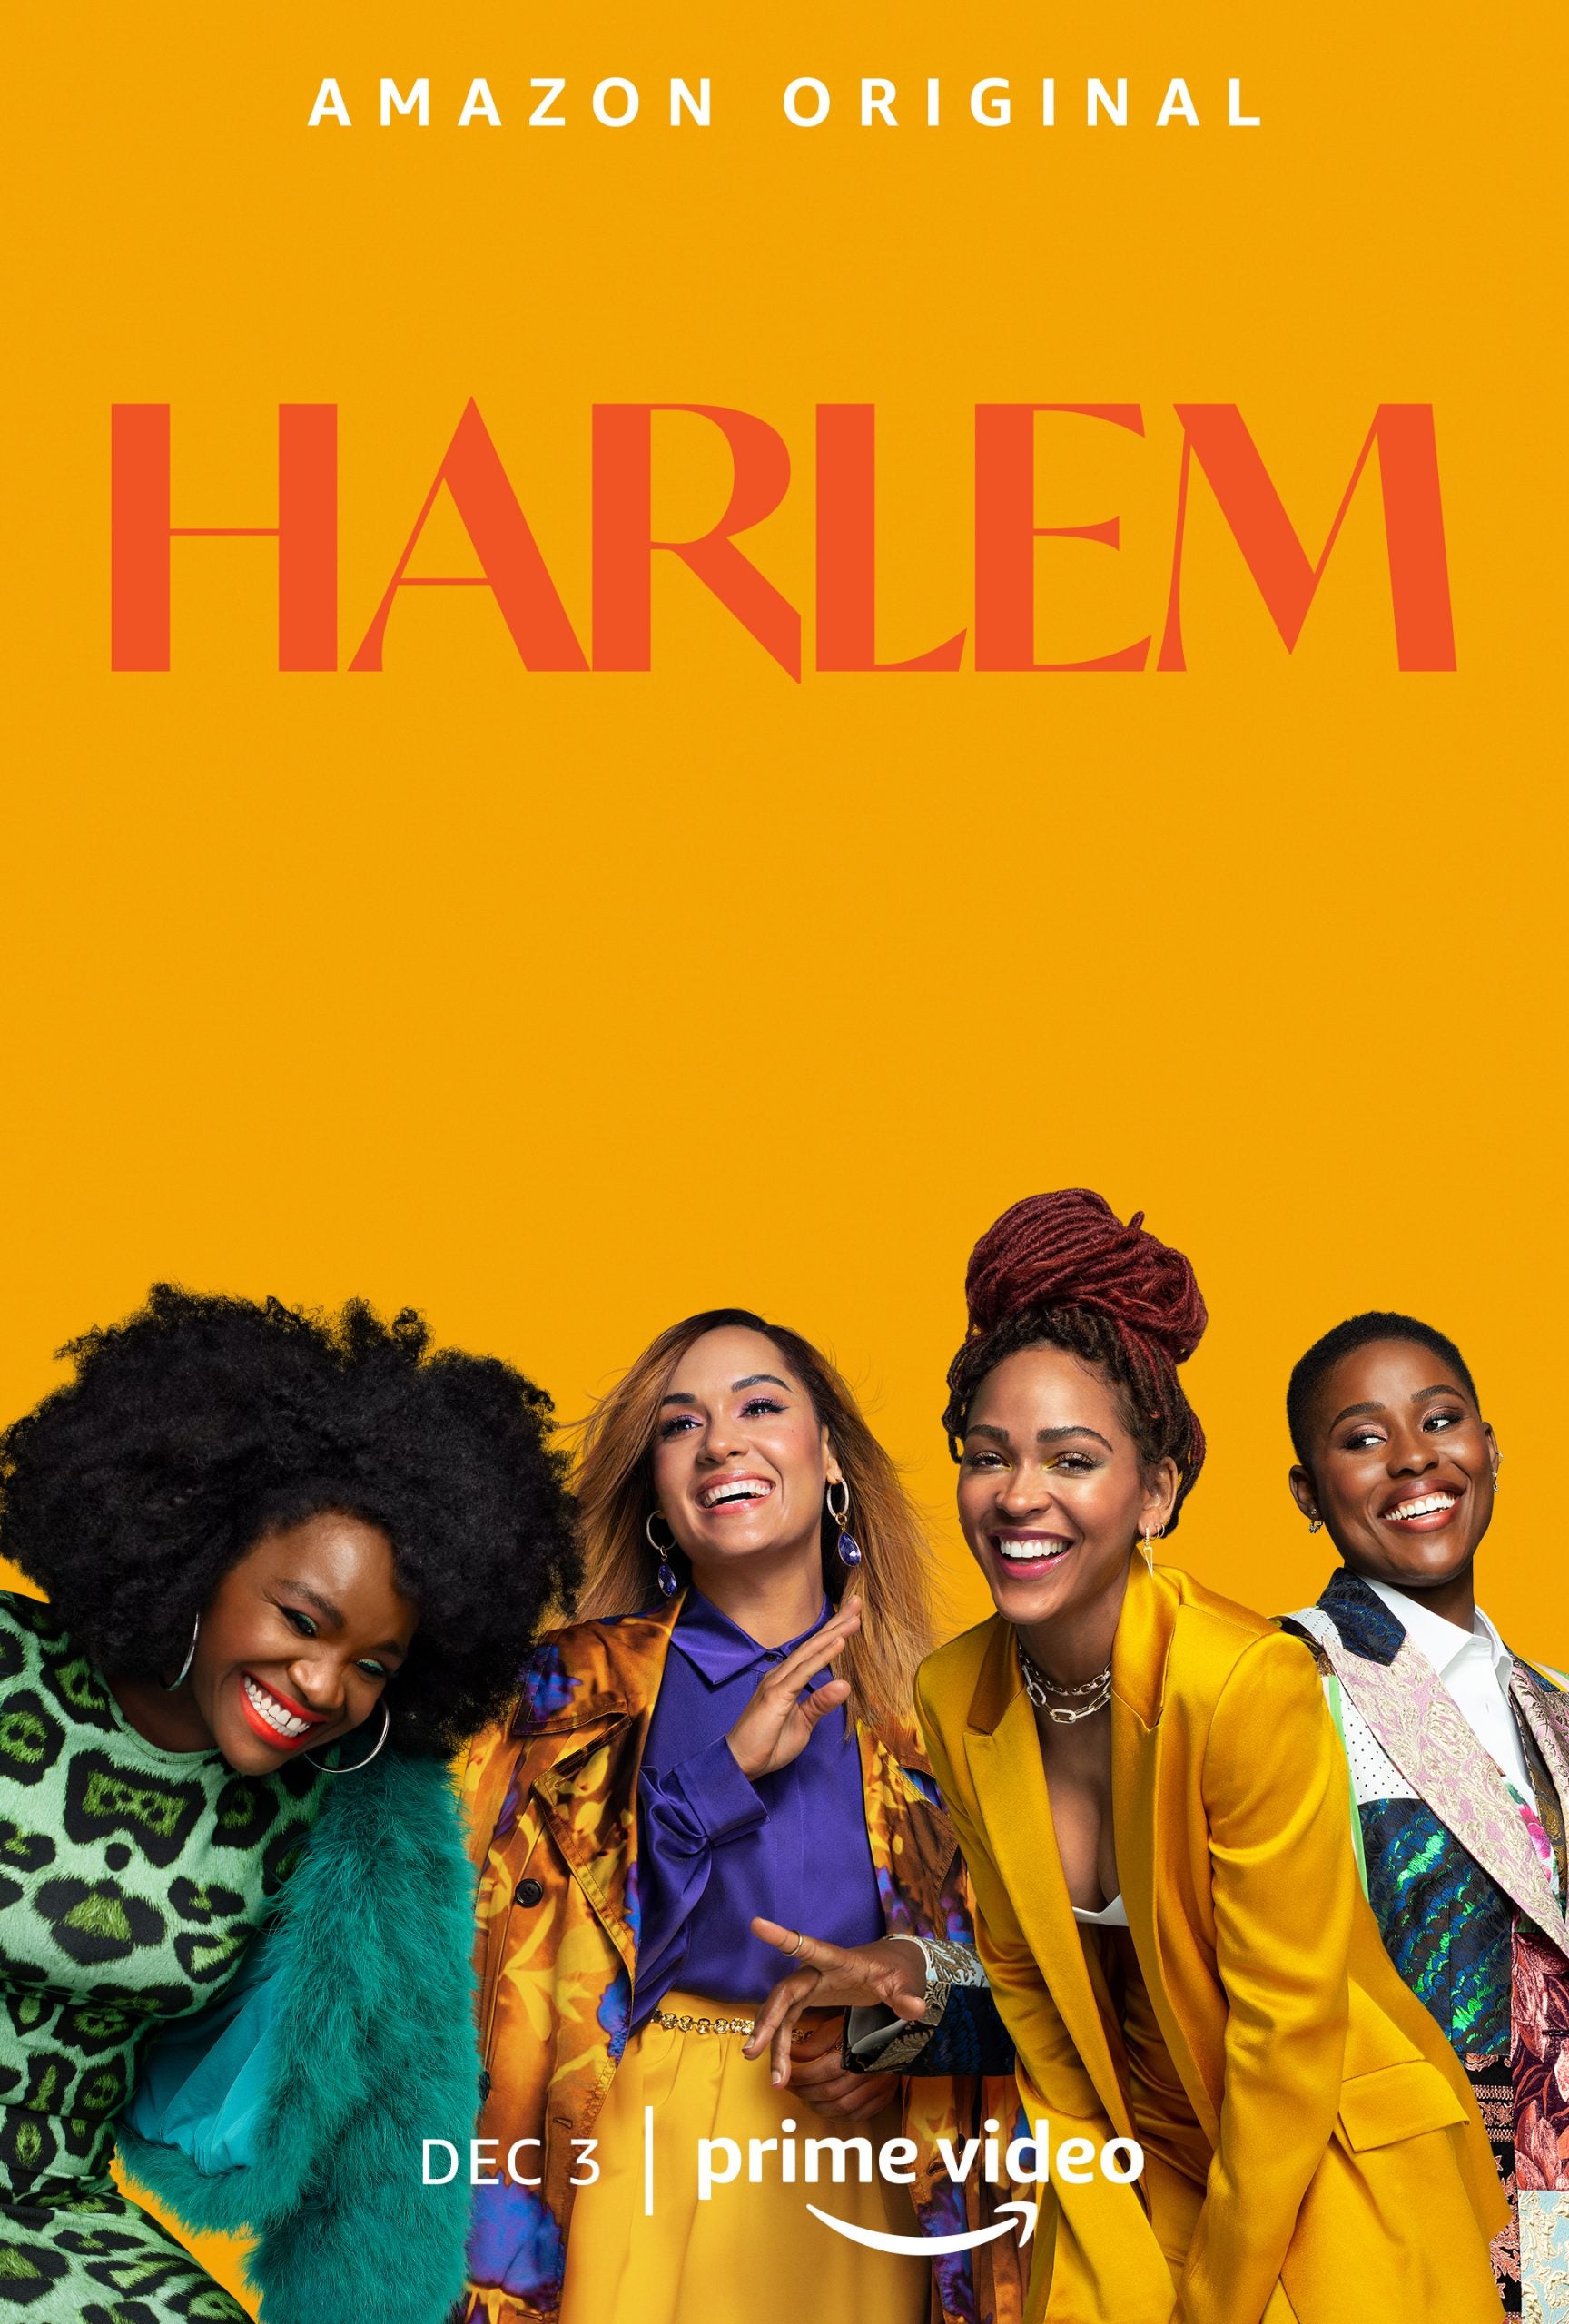 ‘Harlem’ Renewed For A Second Season